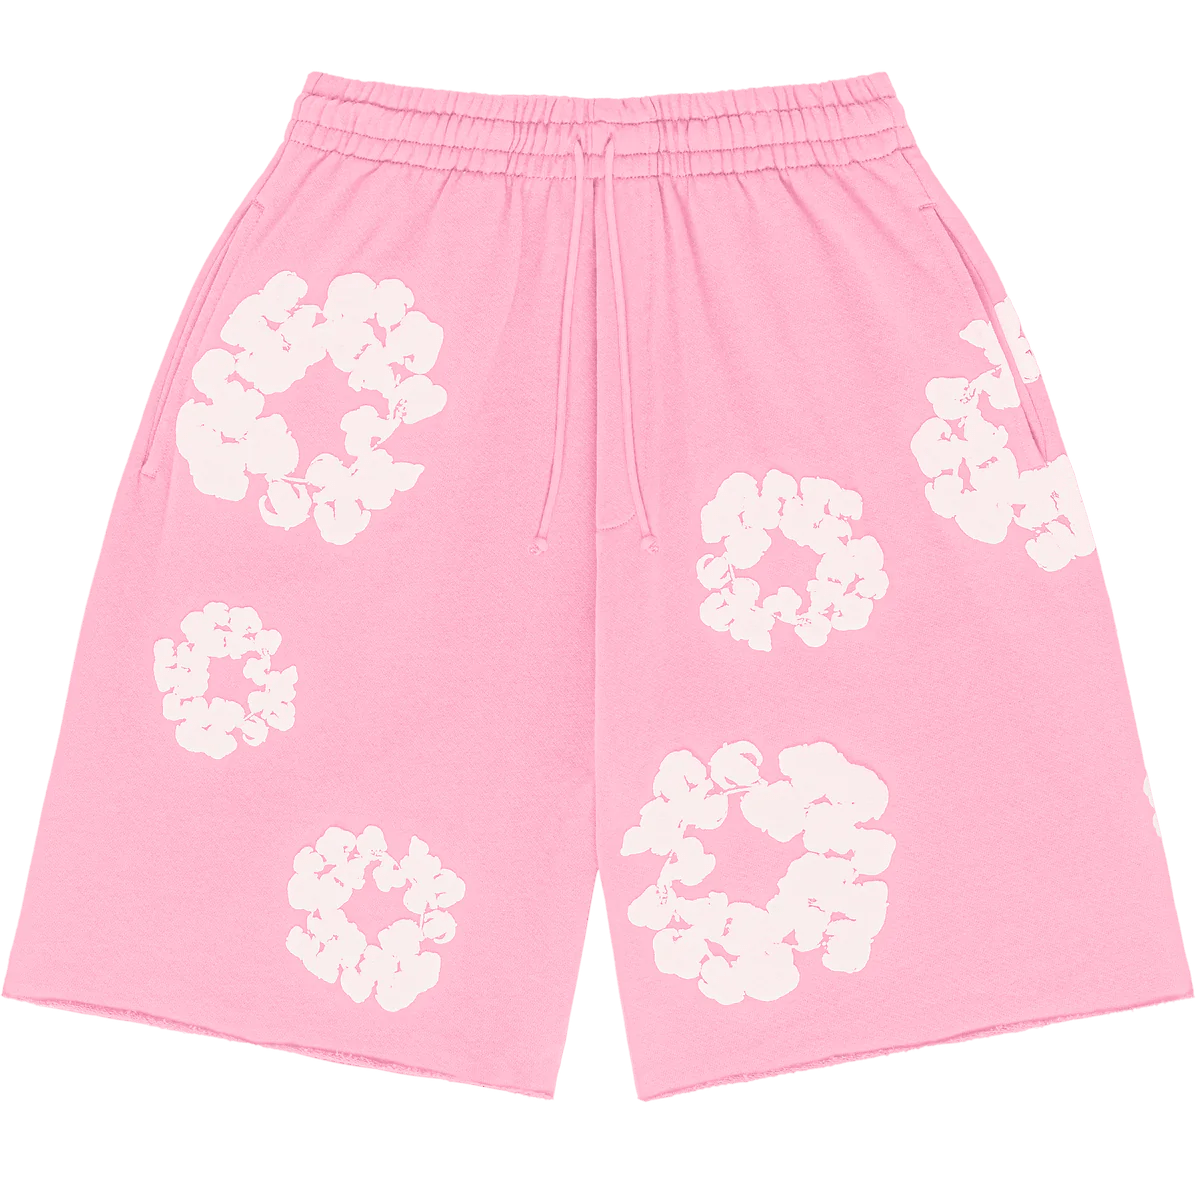 Denim Tears The Cotton Wreath Sweat Shorts Pink-Supra Sneakers-$350.00